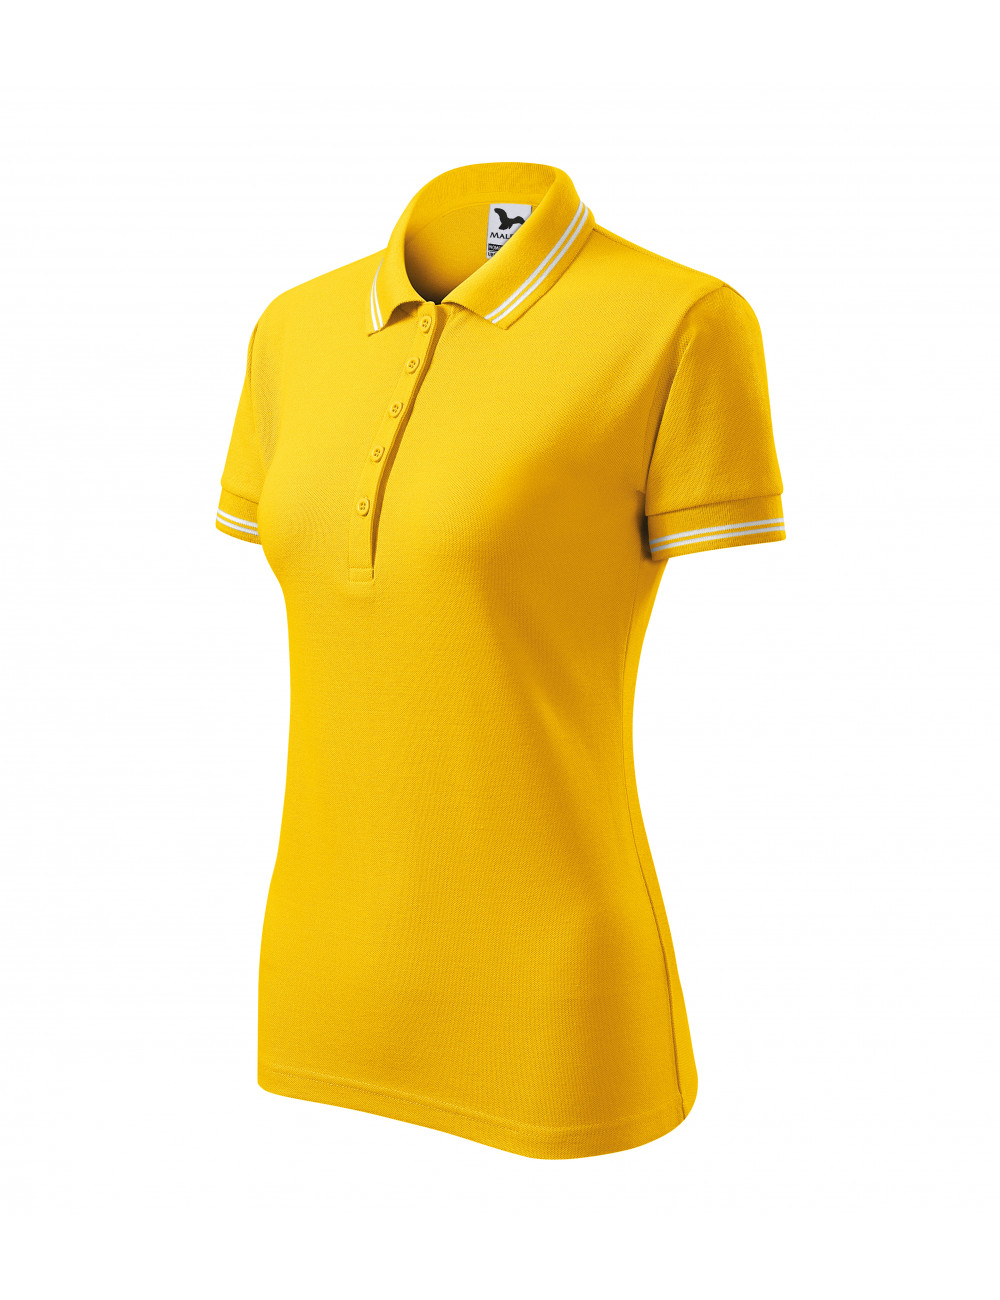 Women`s polo shirt urban 220 yellow Adler Malfini